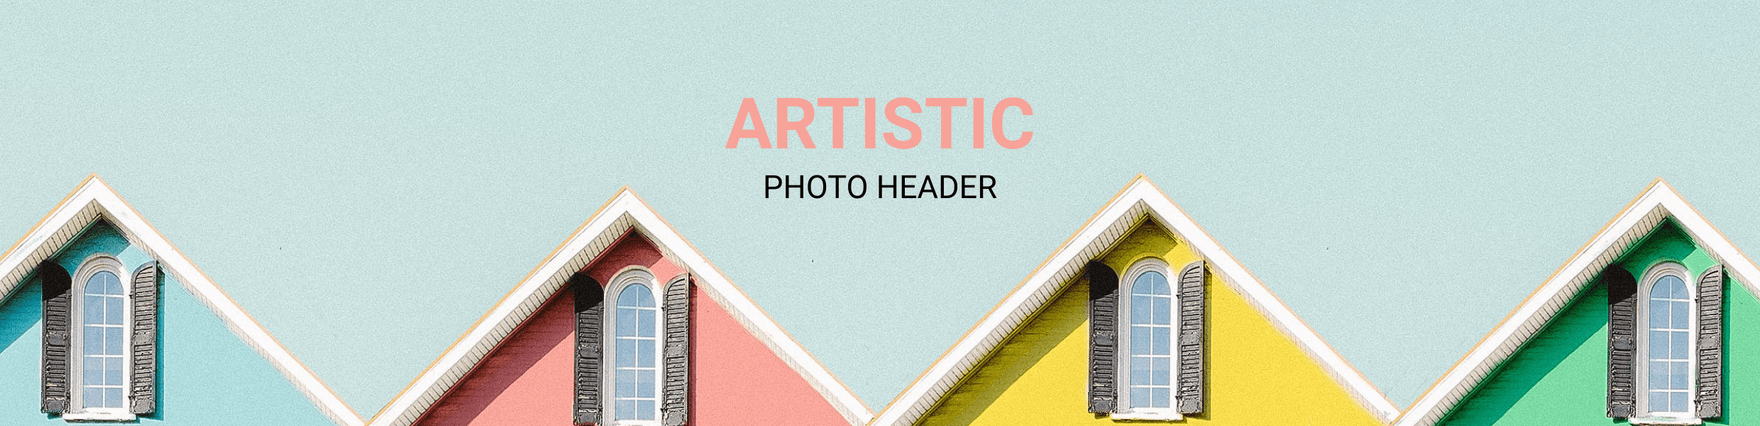 Artistic Photo Header